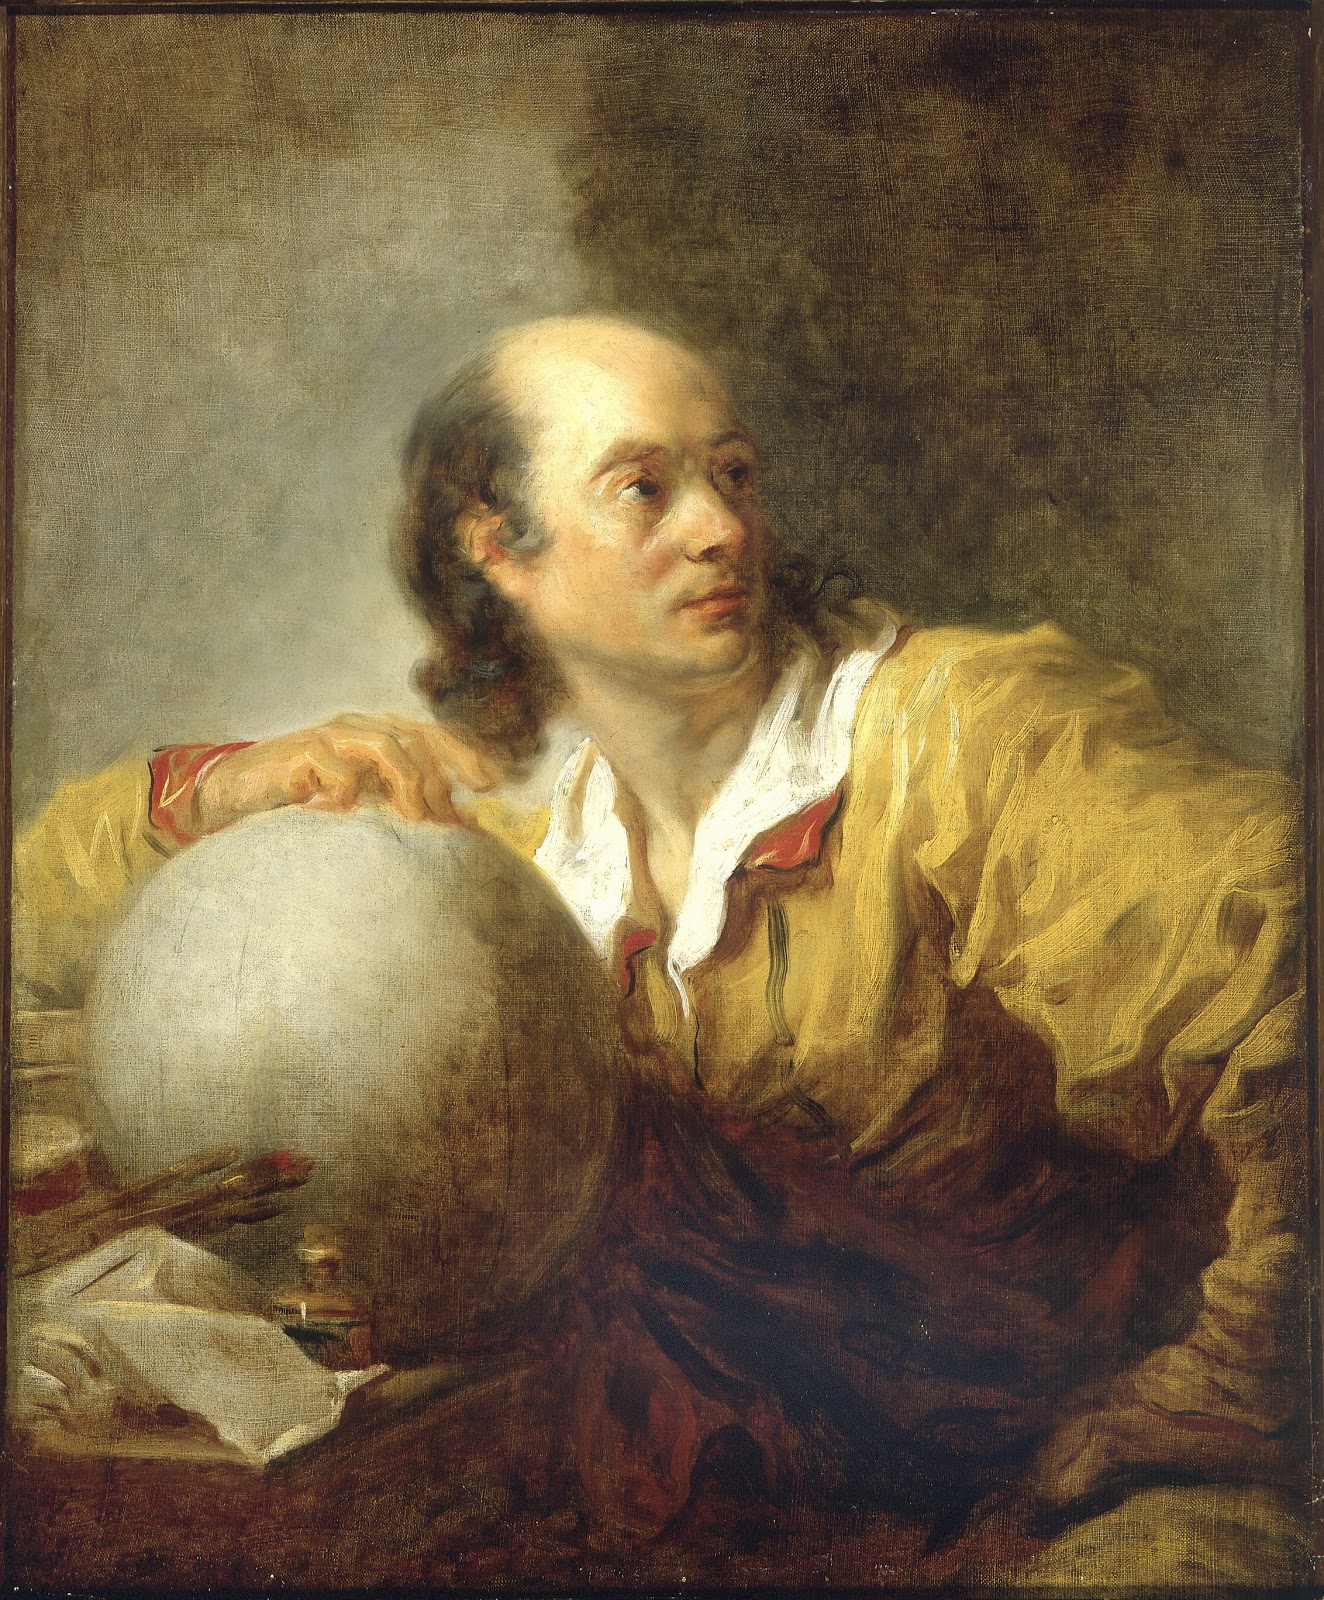 Jean+Honore+Fragonard-1732-1806 (125).jpg